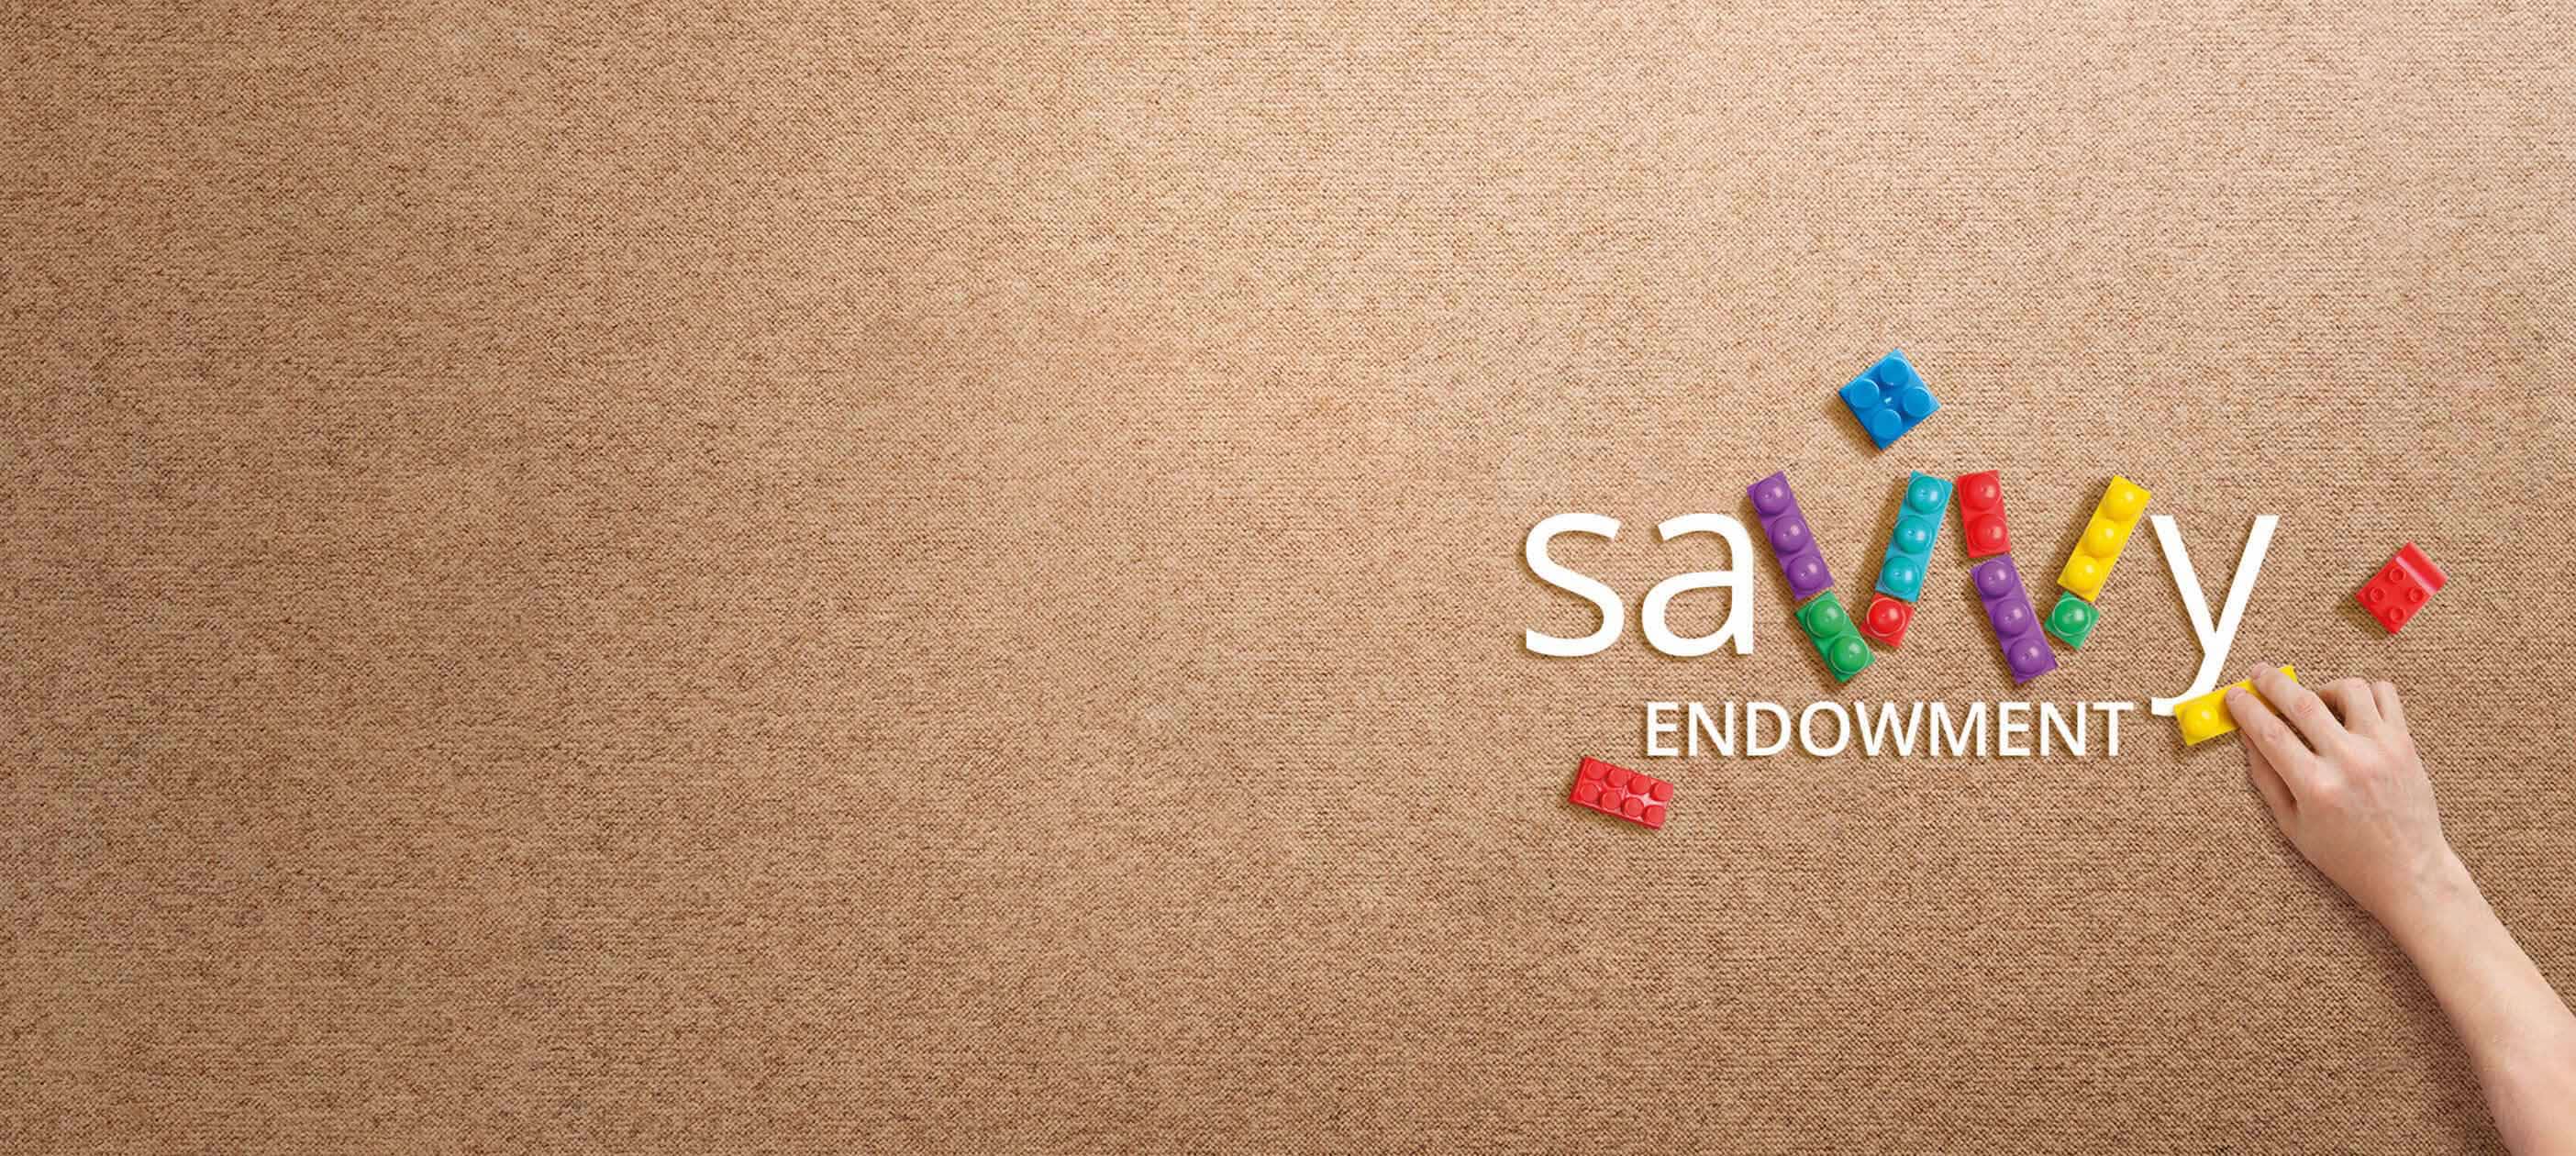 Apply SavvyEndowment 6 online now!